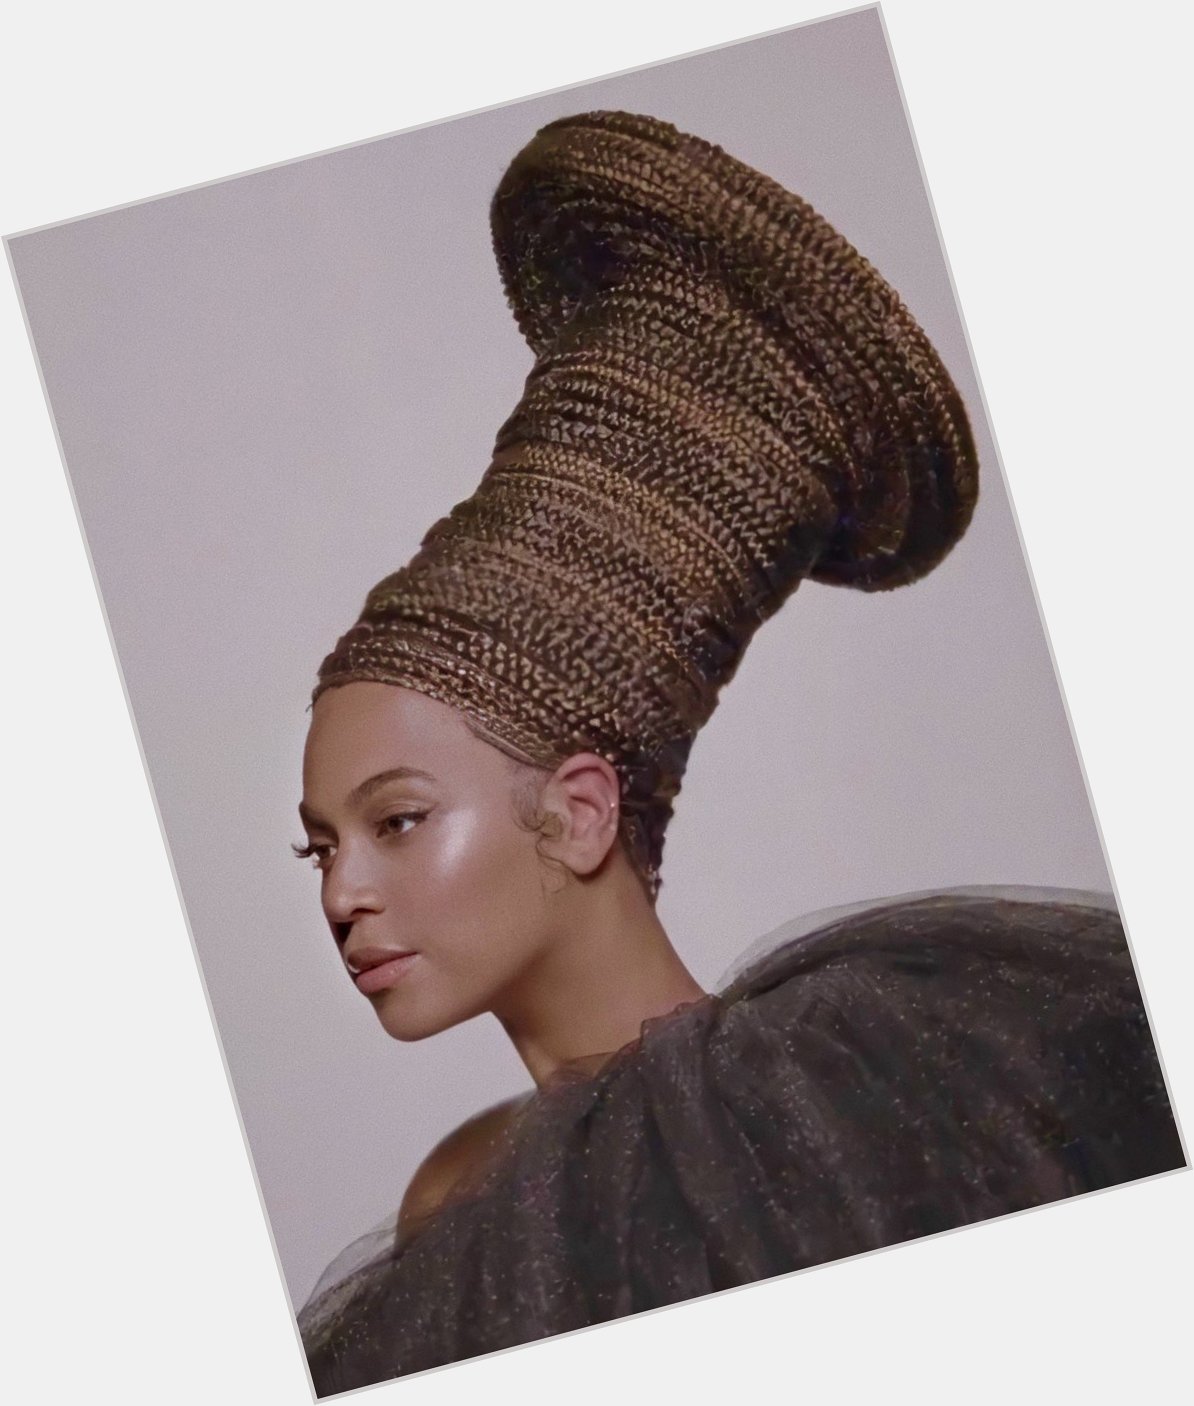 Happy birthday Beyoncé Knowles Carter. The original mama Africa 